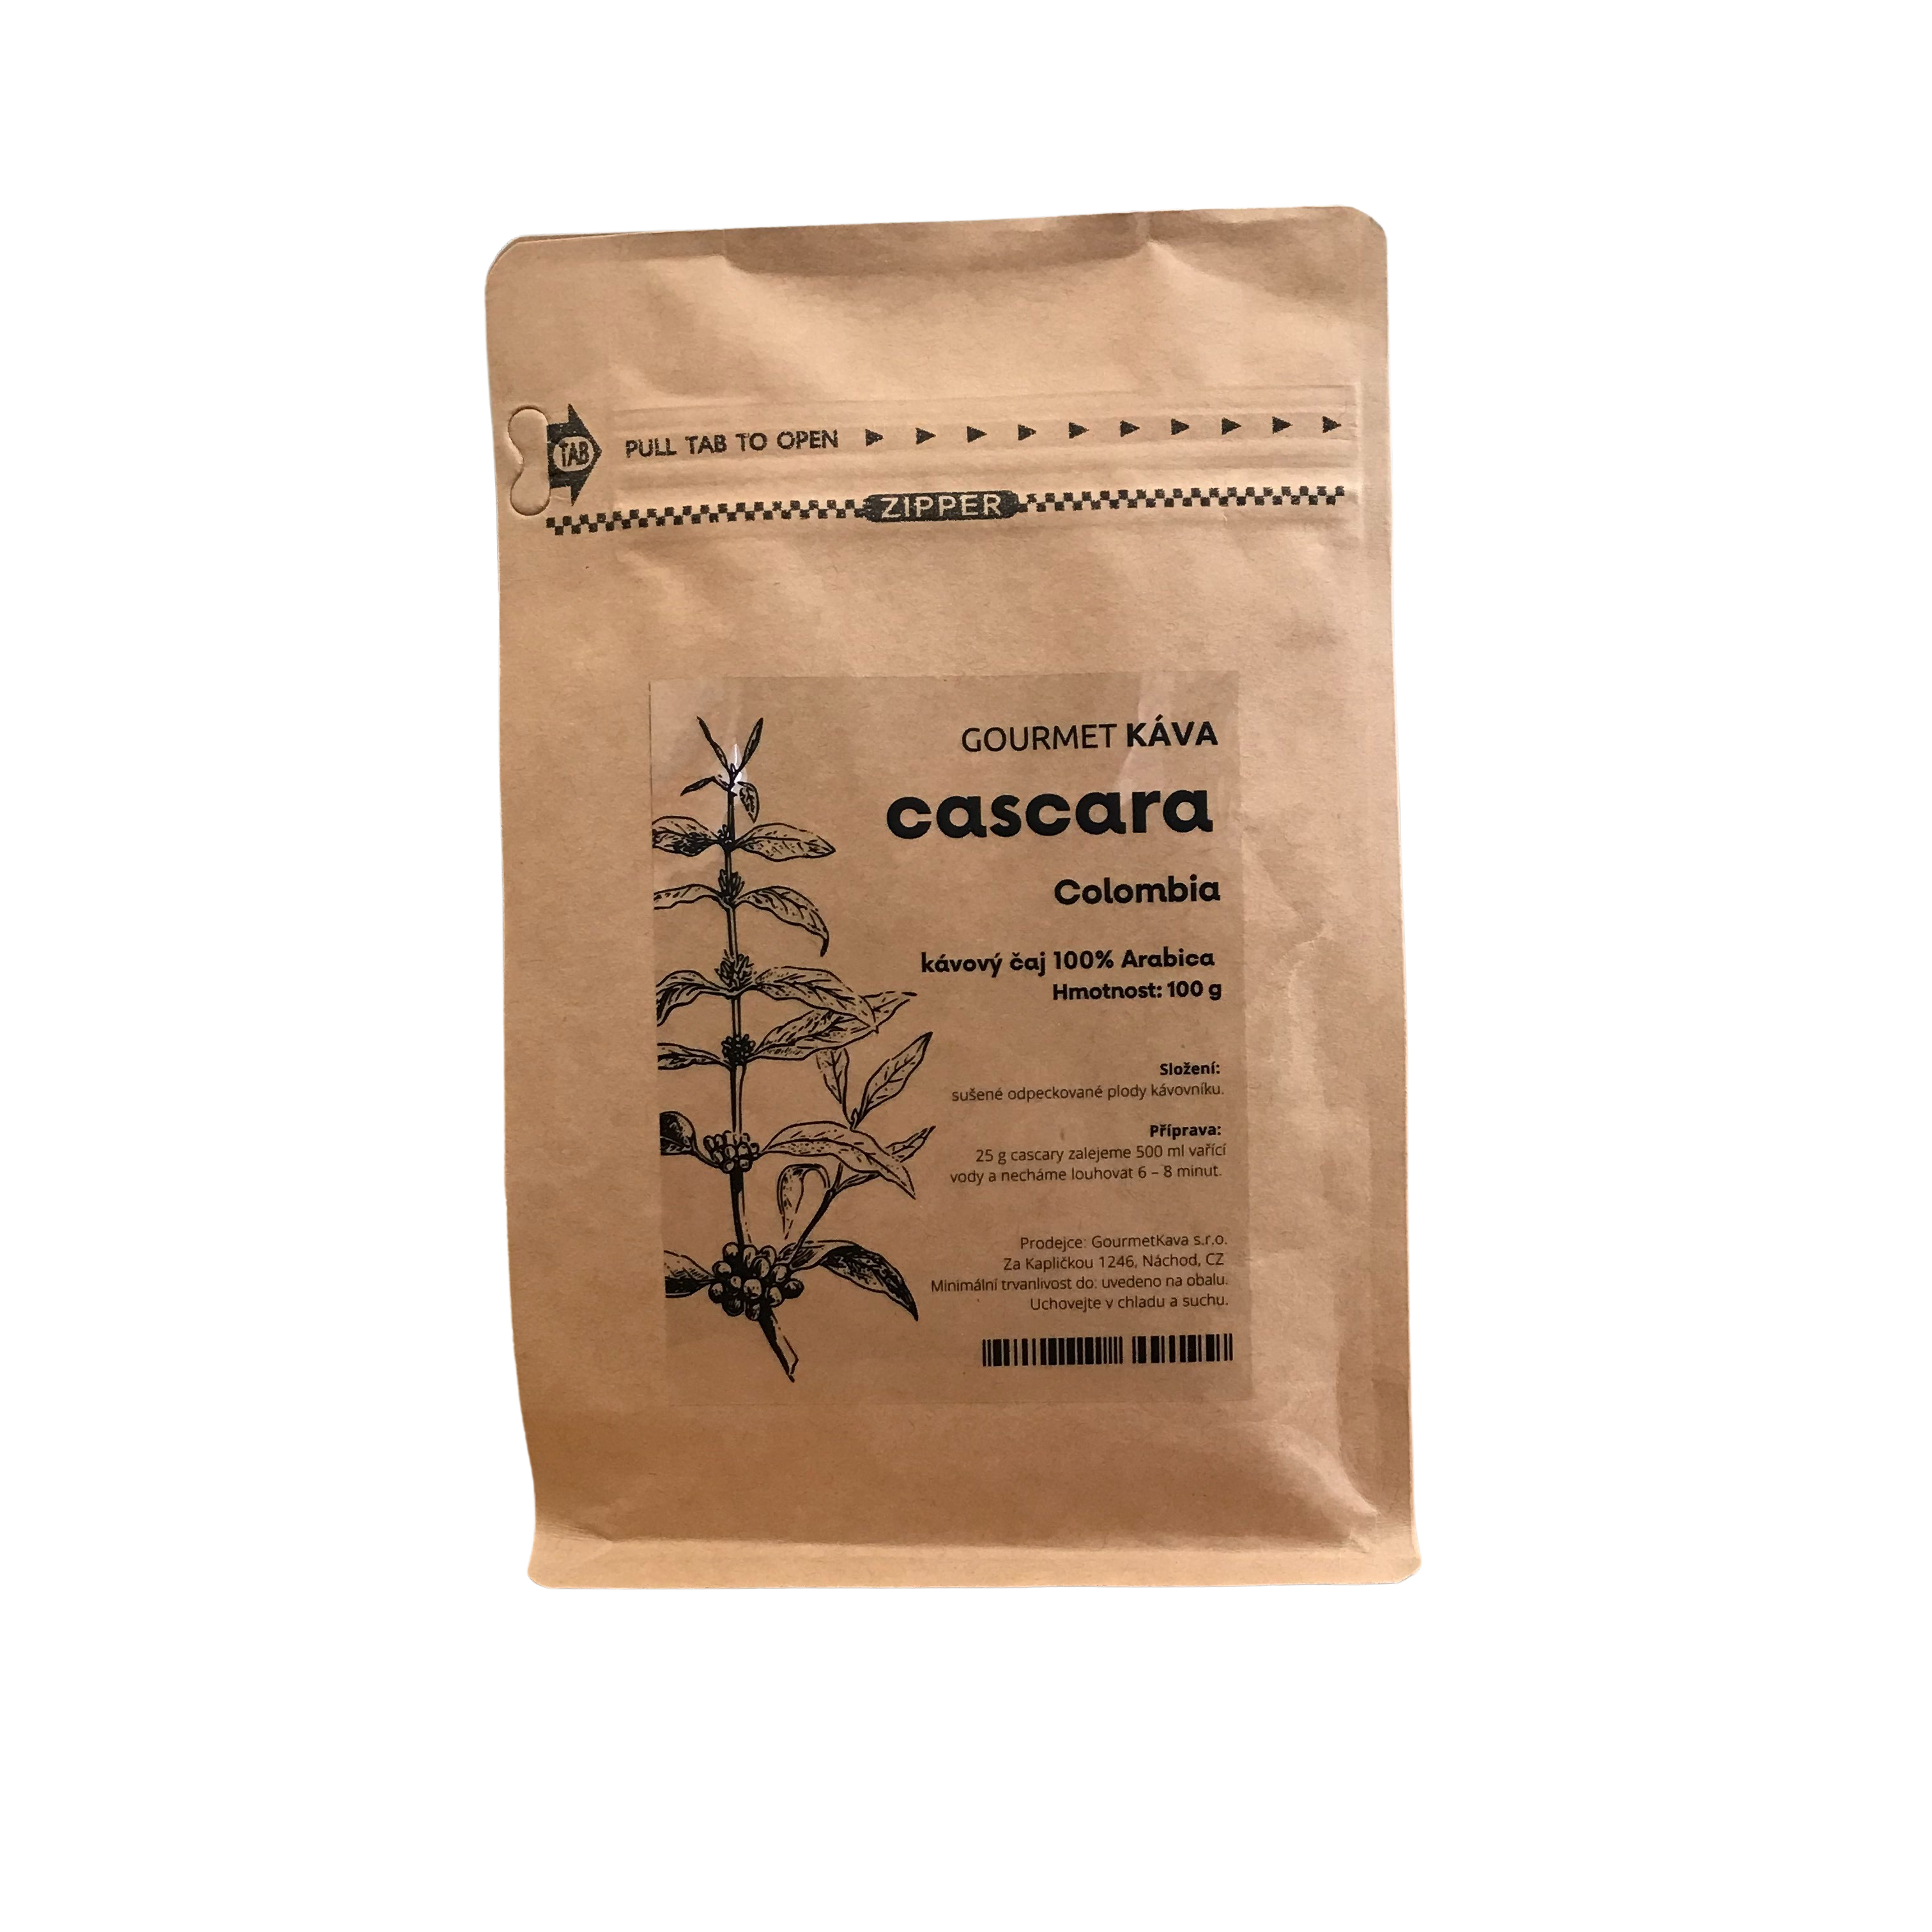 Colombian coffee tea Cascara, 100g